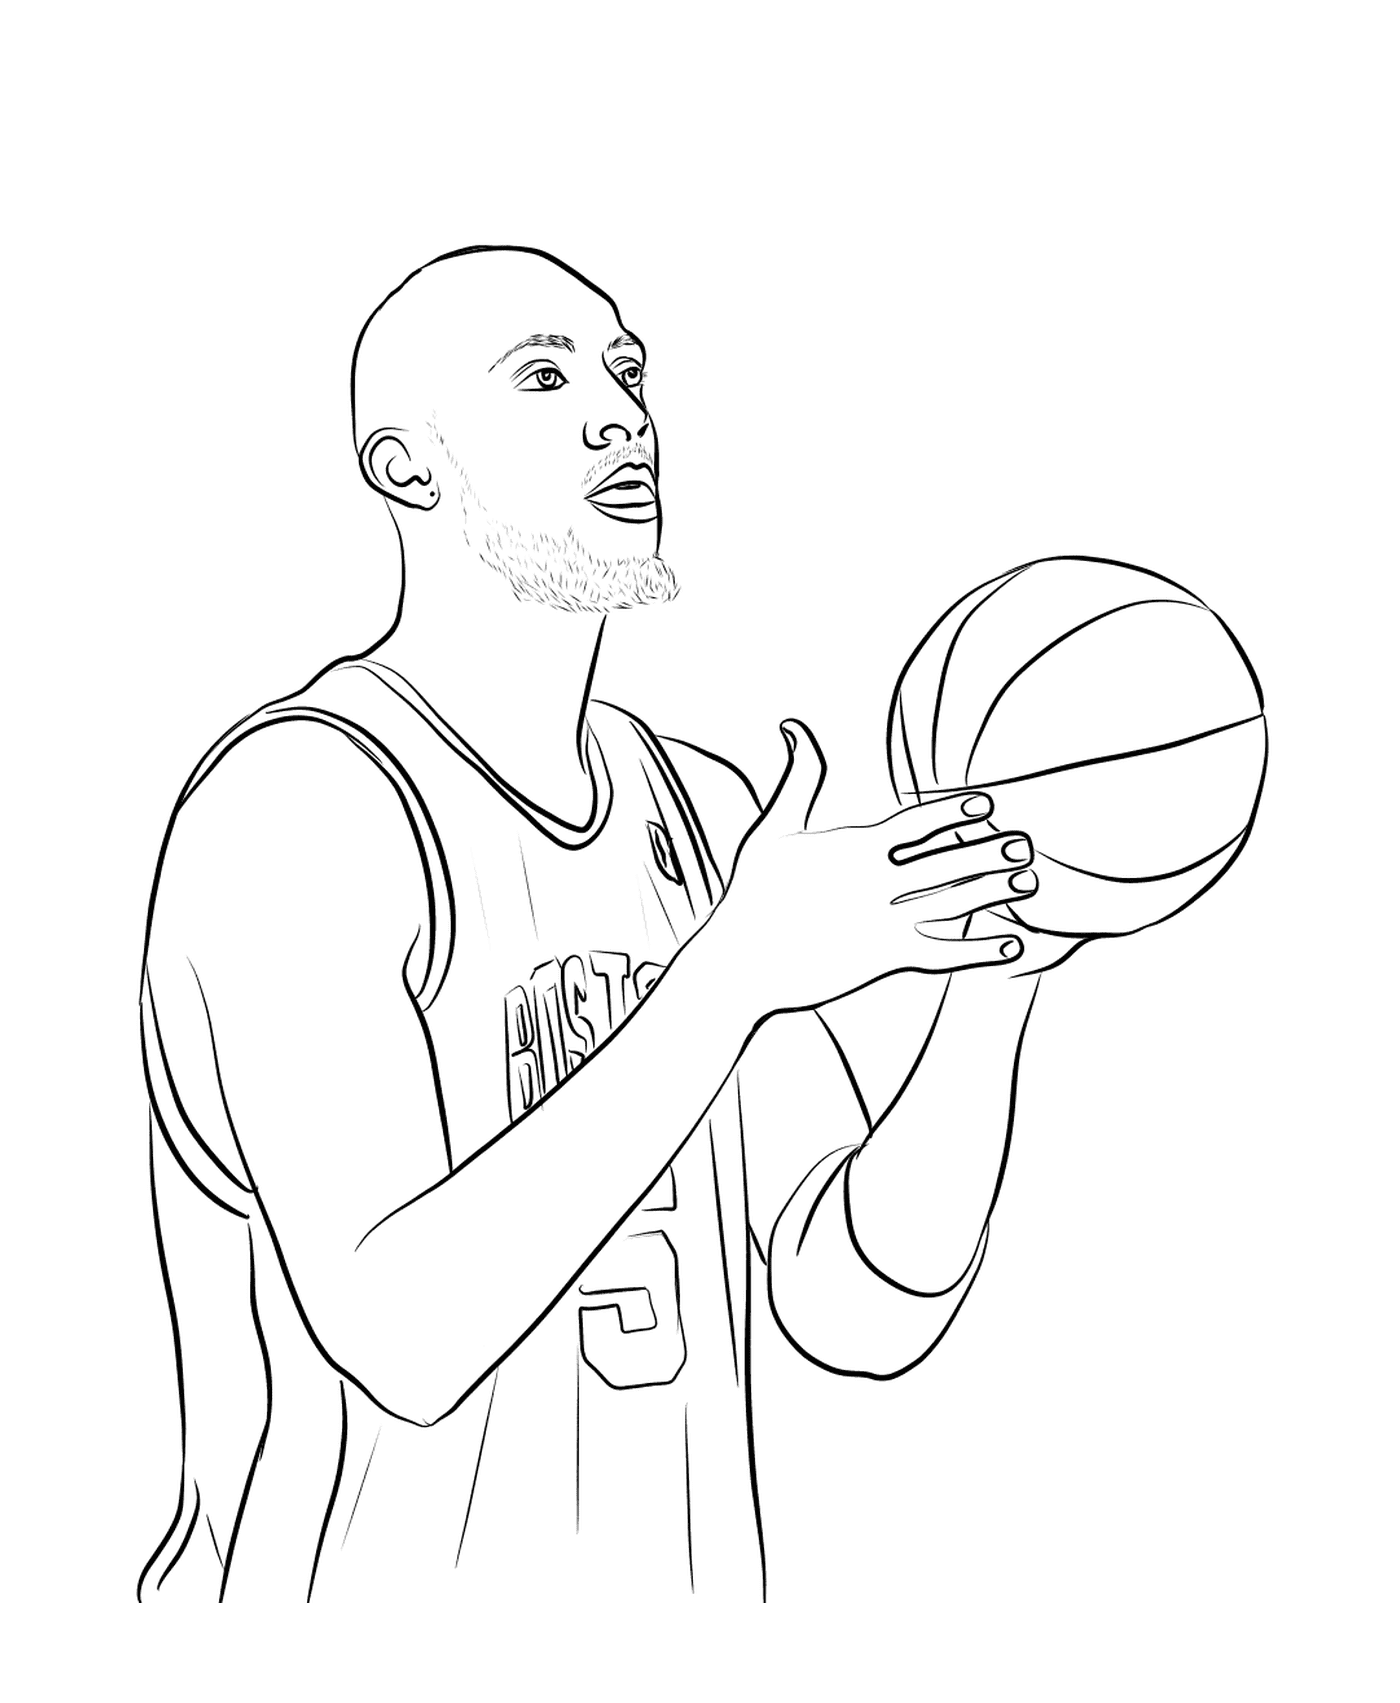  Kevin Garnett holds a basketball ball 